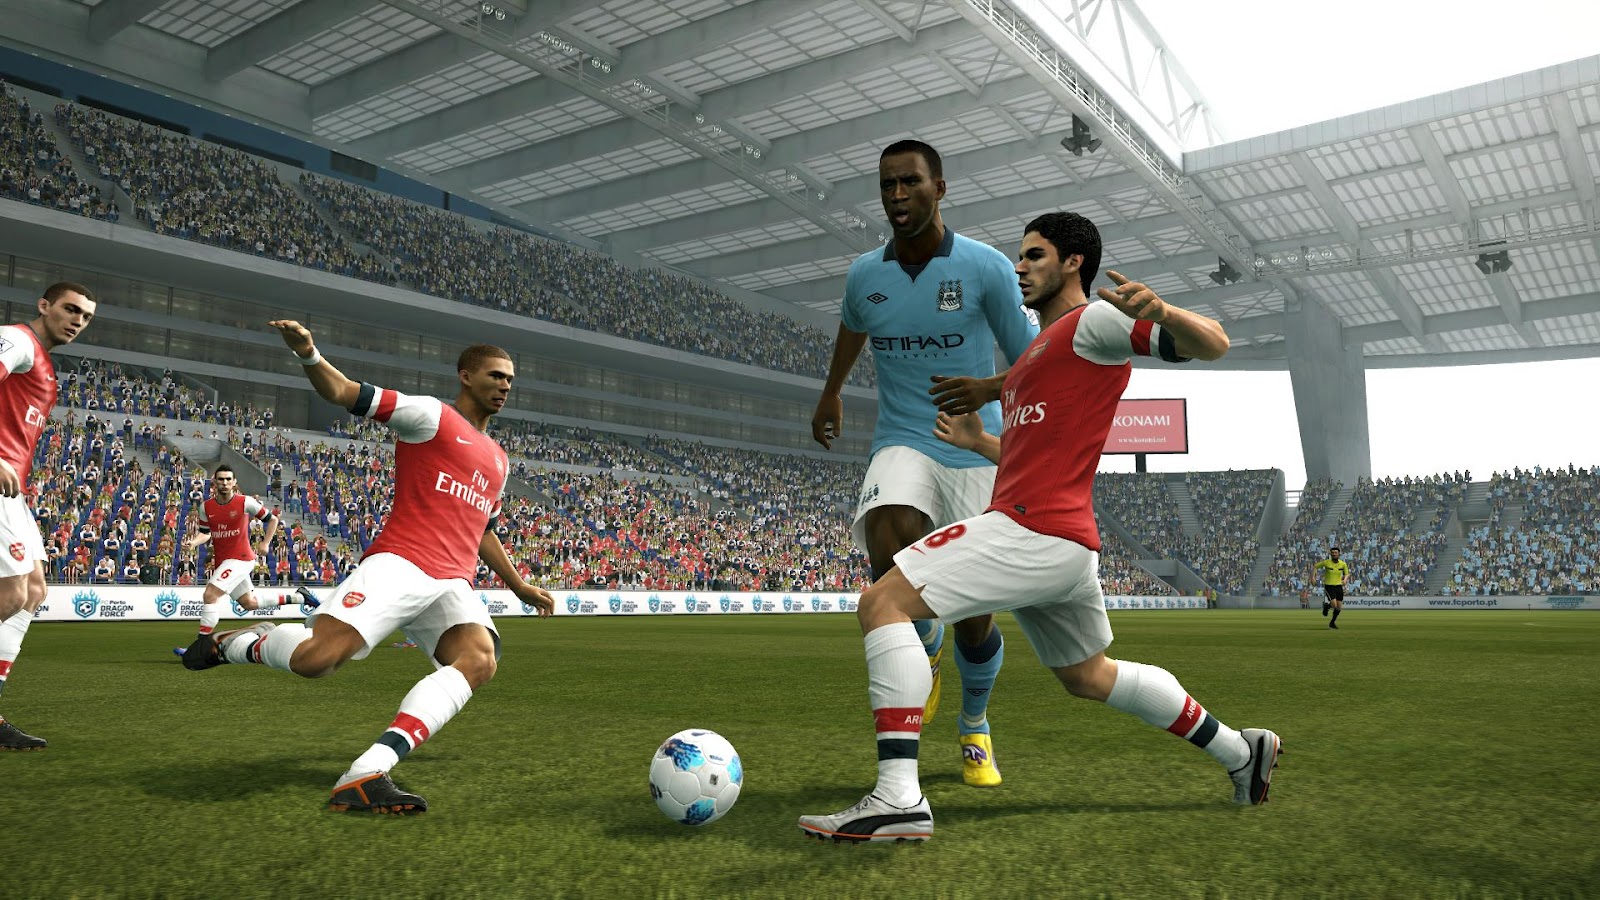 Baixar Pes 2012 Patch 1.06 OFFICIAL - Pro Evolution Soccer 2012 - Tribo  Gamer